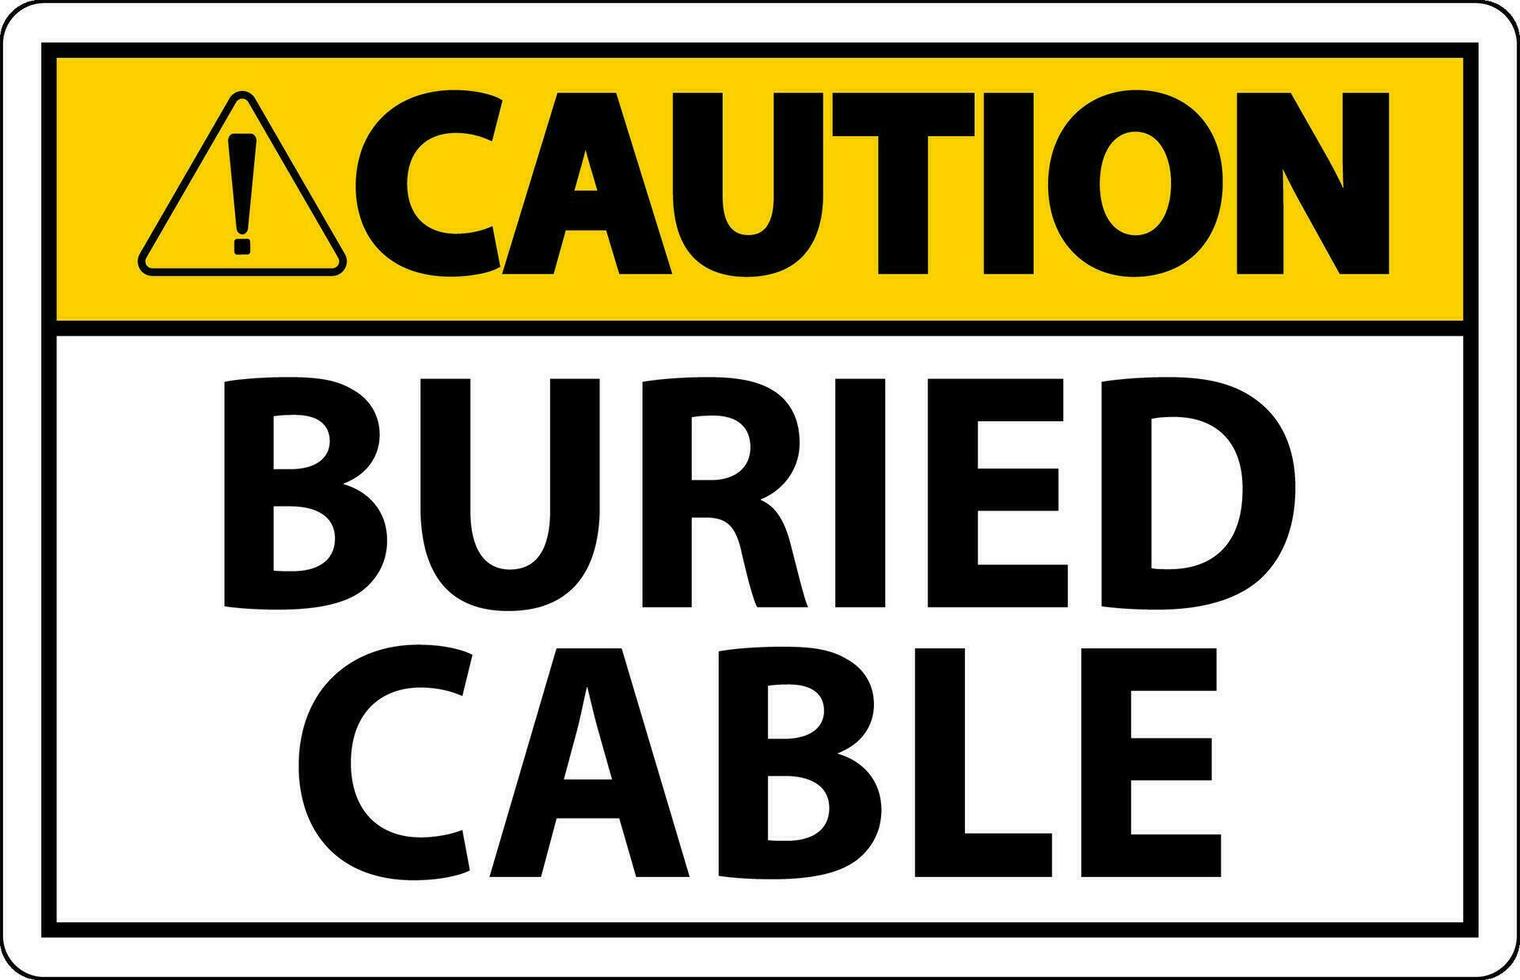 varning tecken begravd kabel- på vit bakgrund vektor